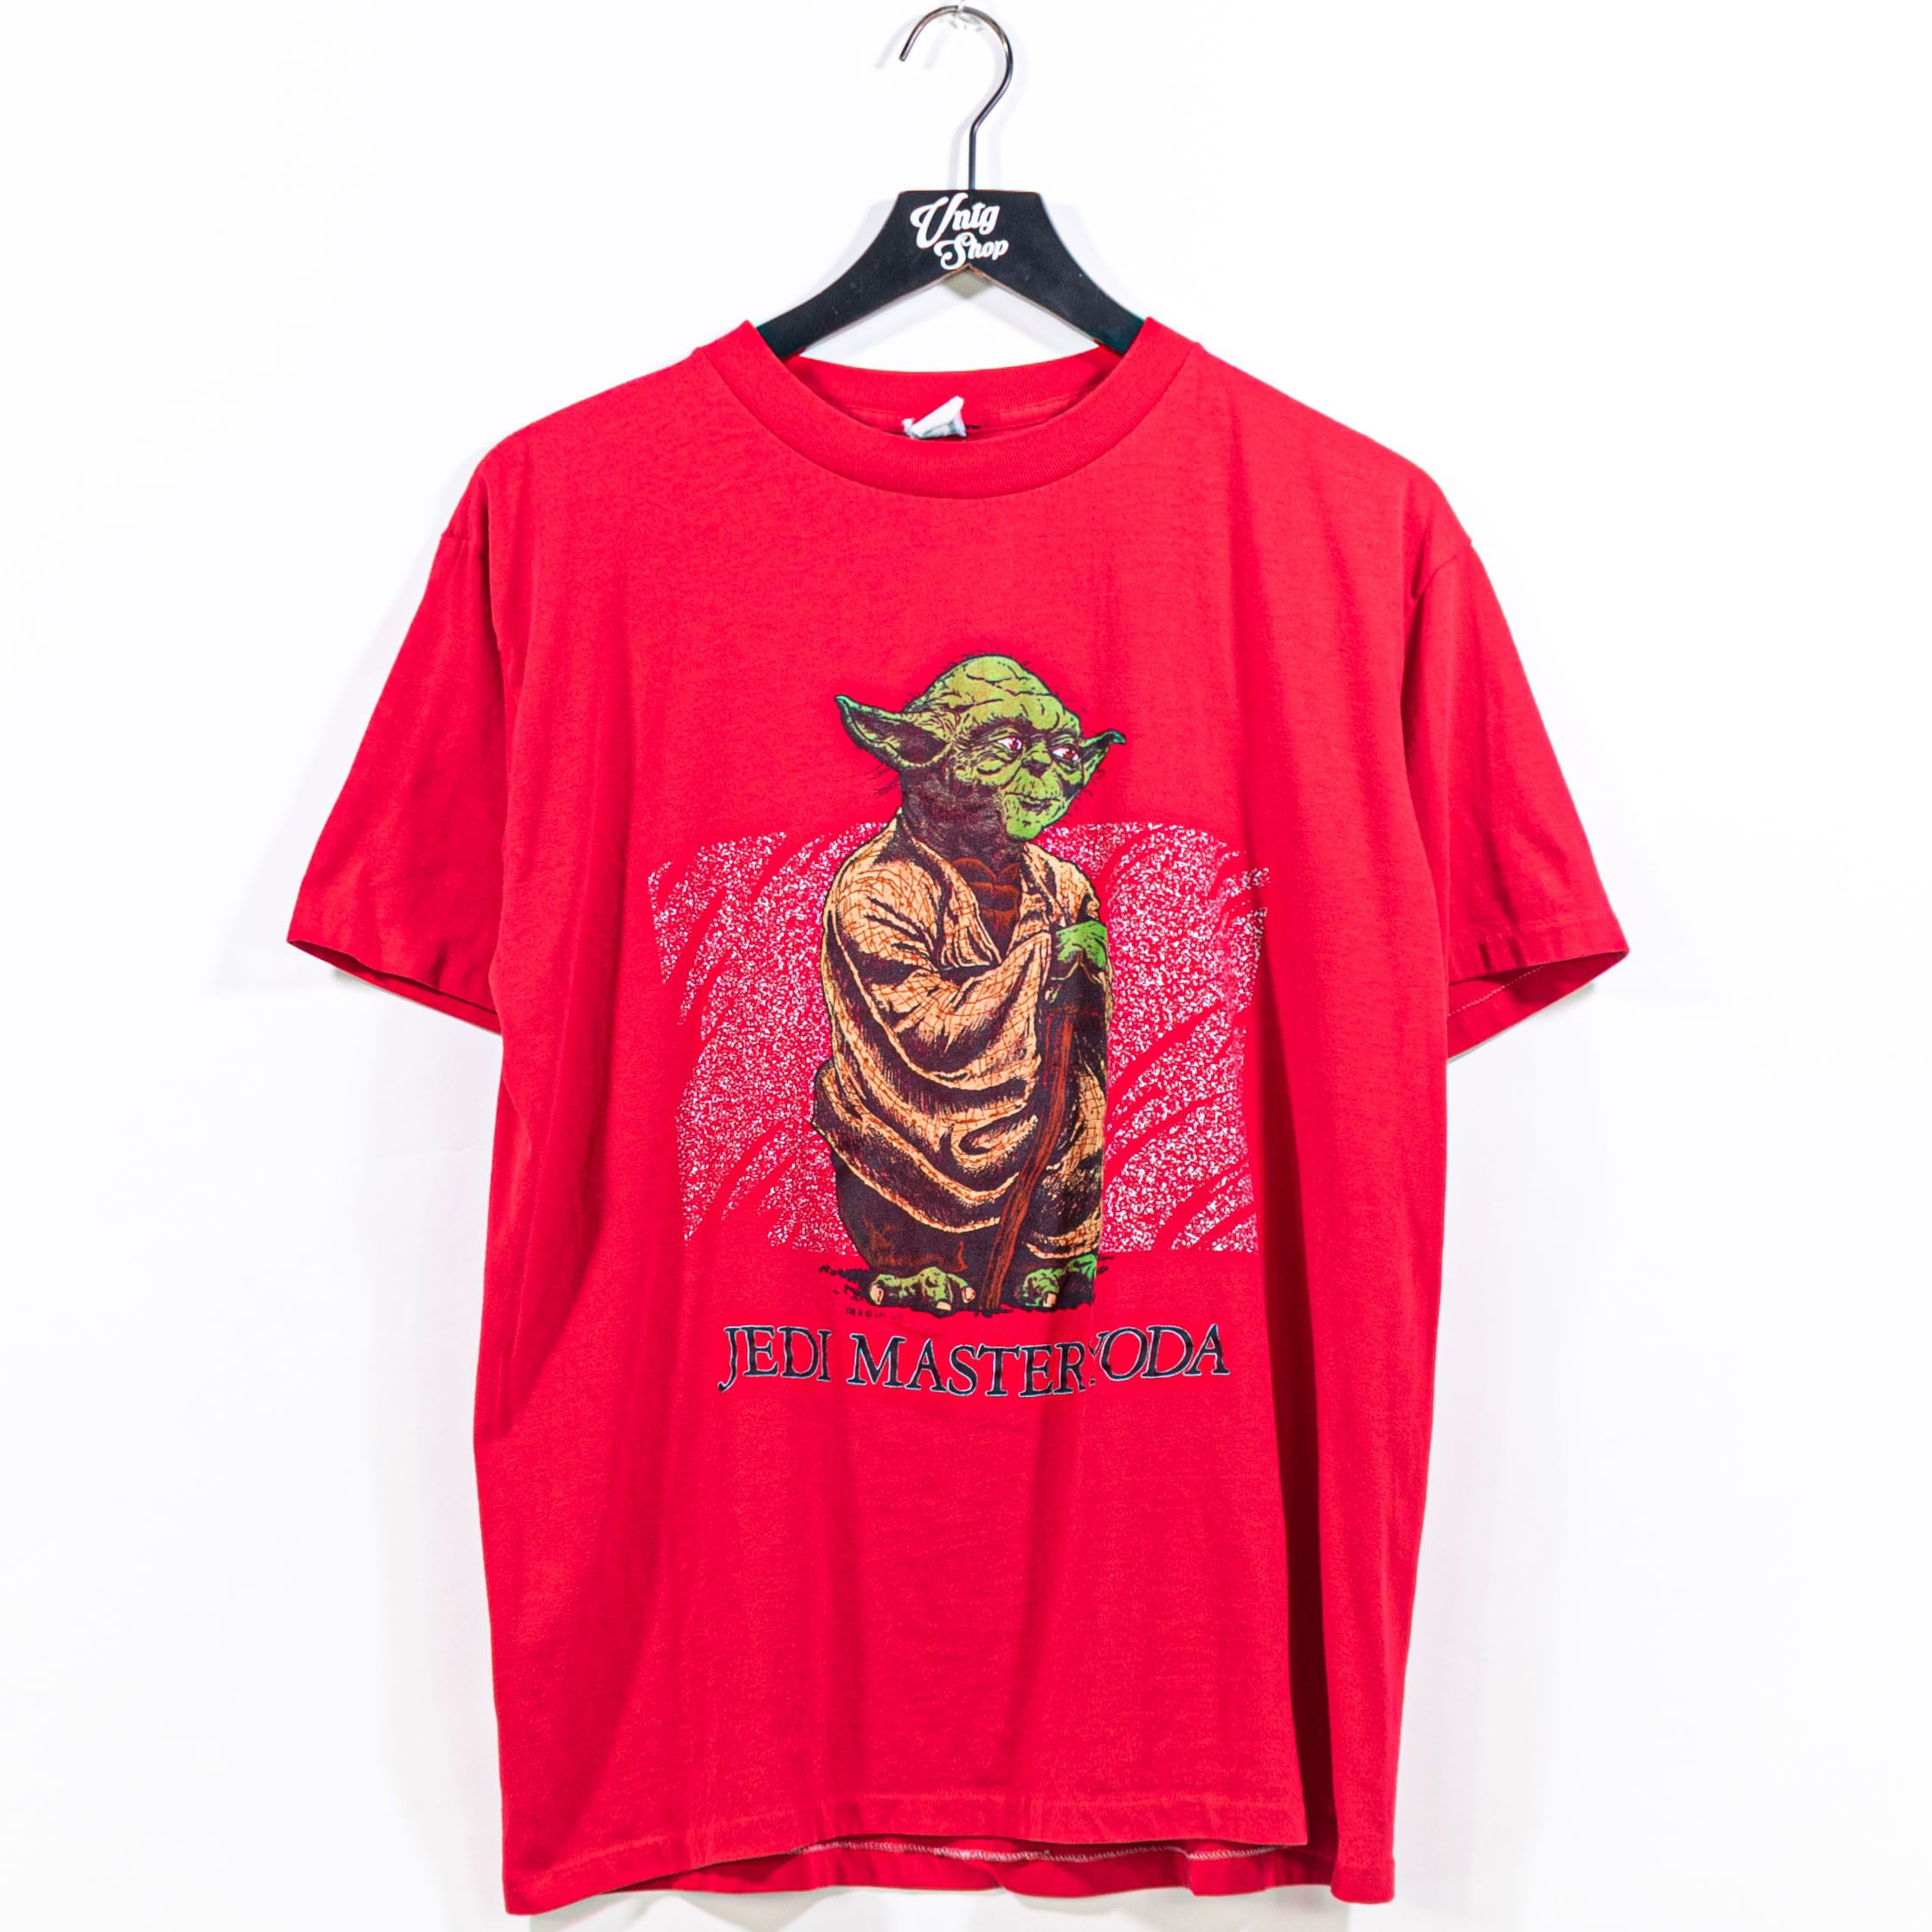 Vintage Star Wars Jedi Master Yoda T-Shirt VTG Artex George Lucas Size US L / EU 52-54 / 3 - 1 Preview